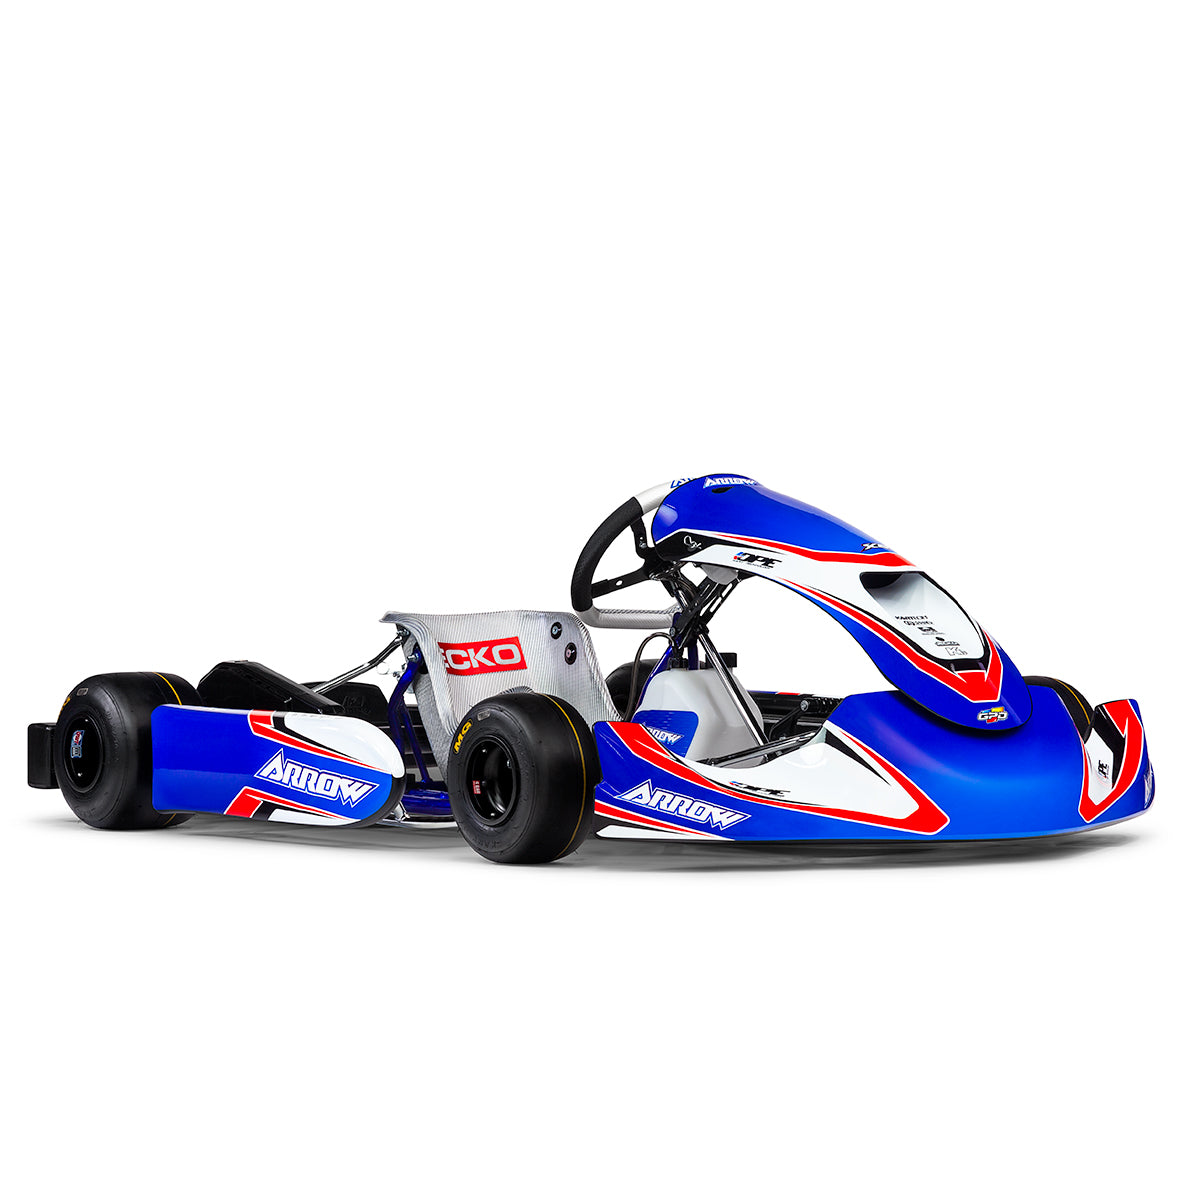 Arrow Racing Kart - X6.1 Senior. Go Kart Racing